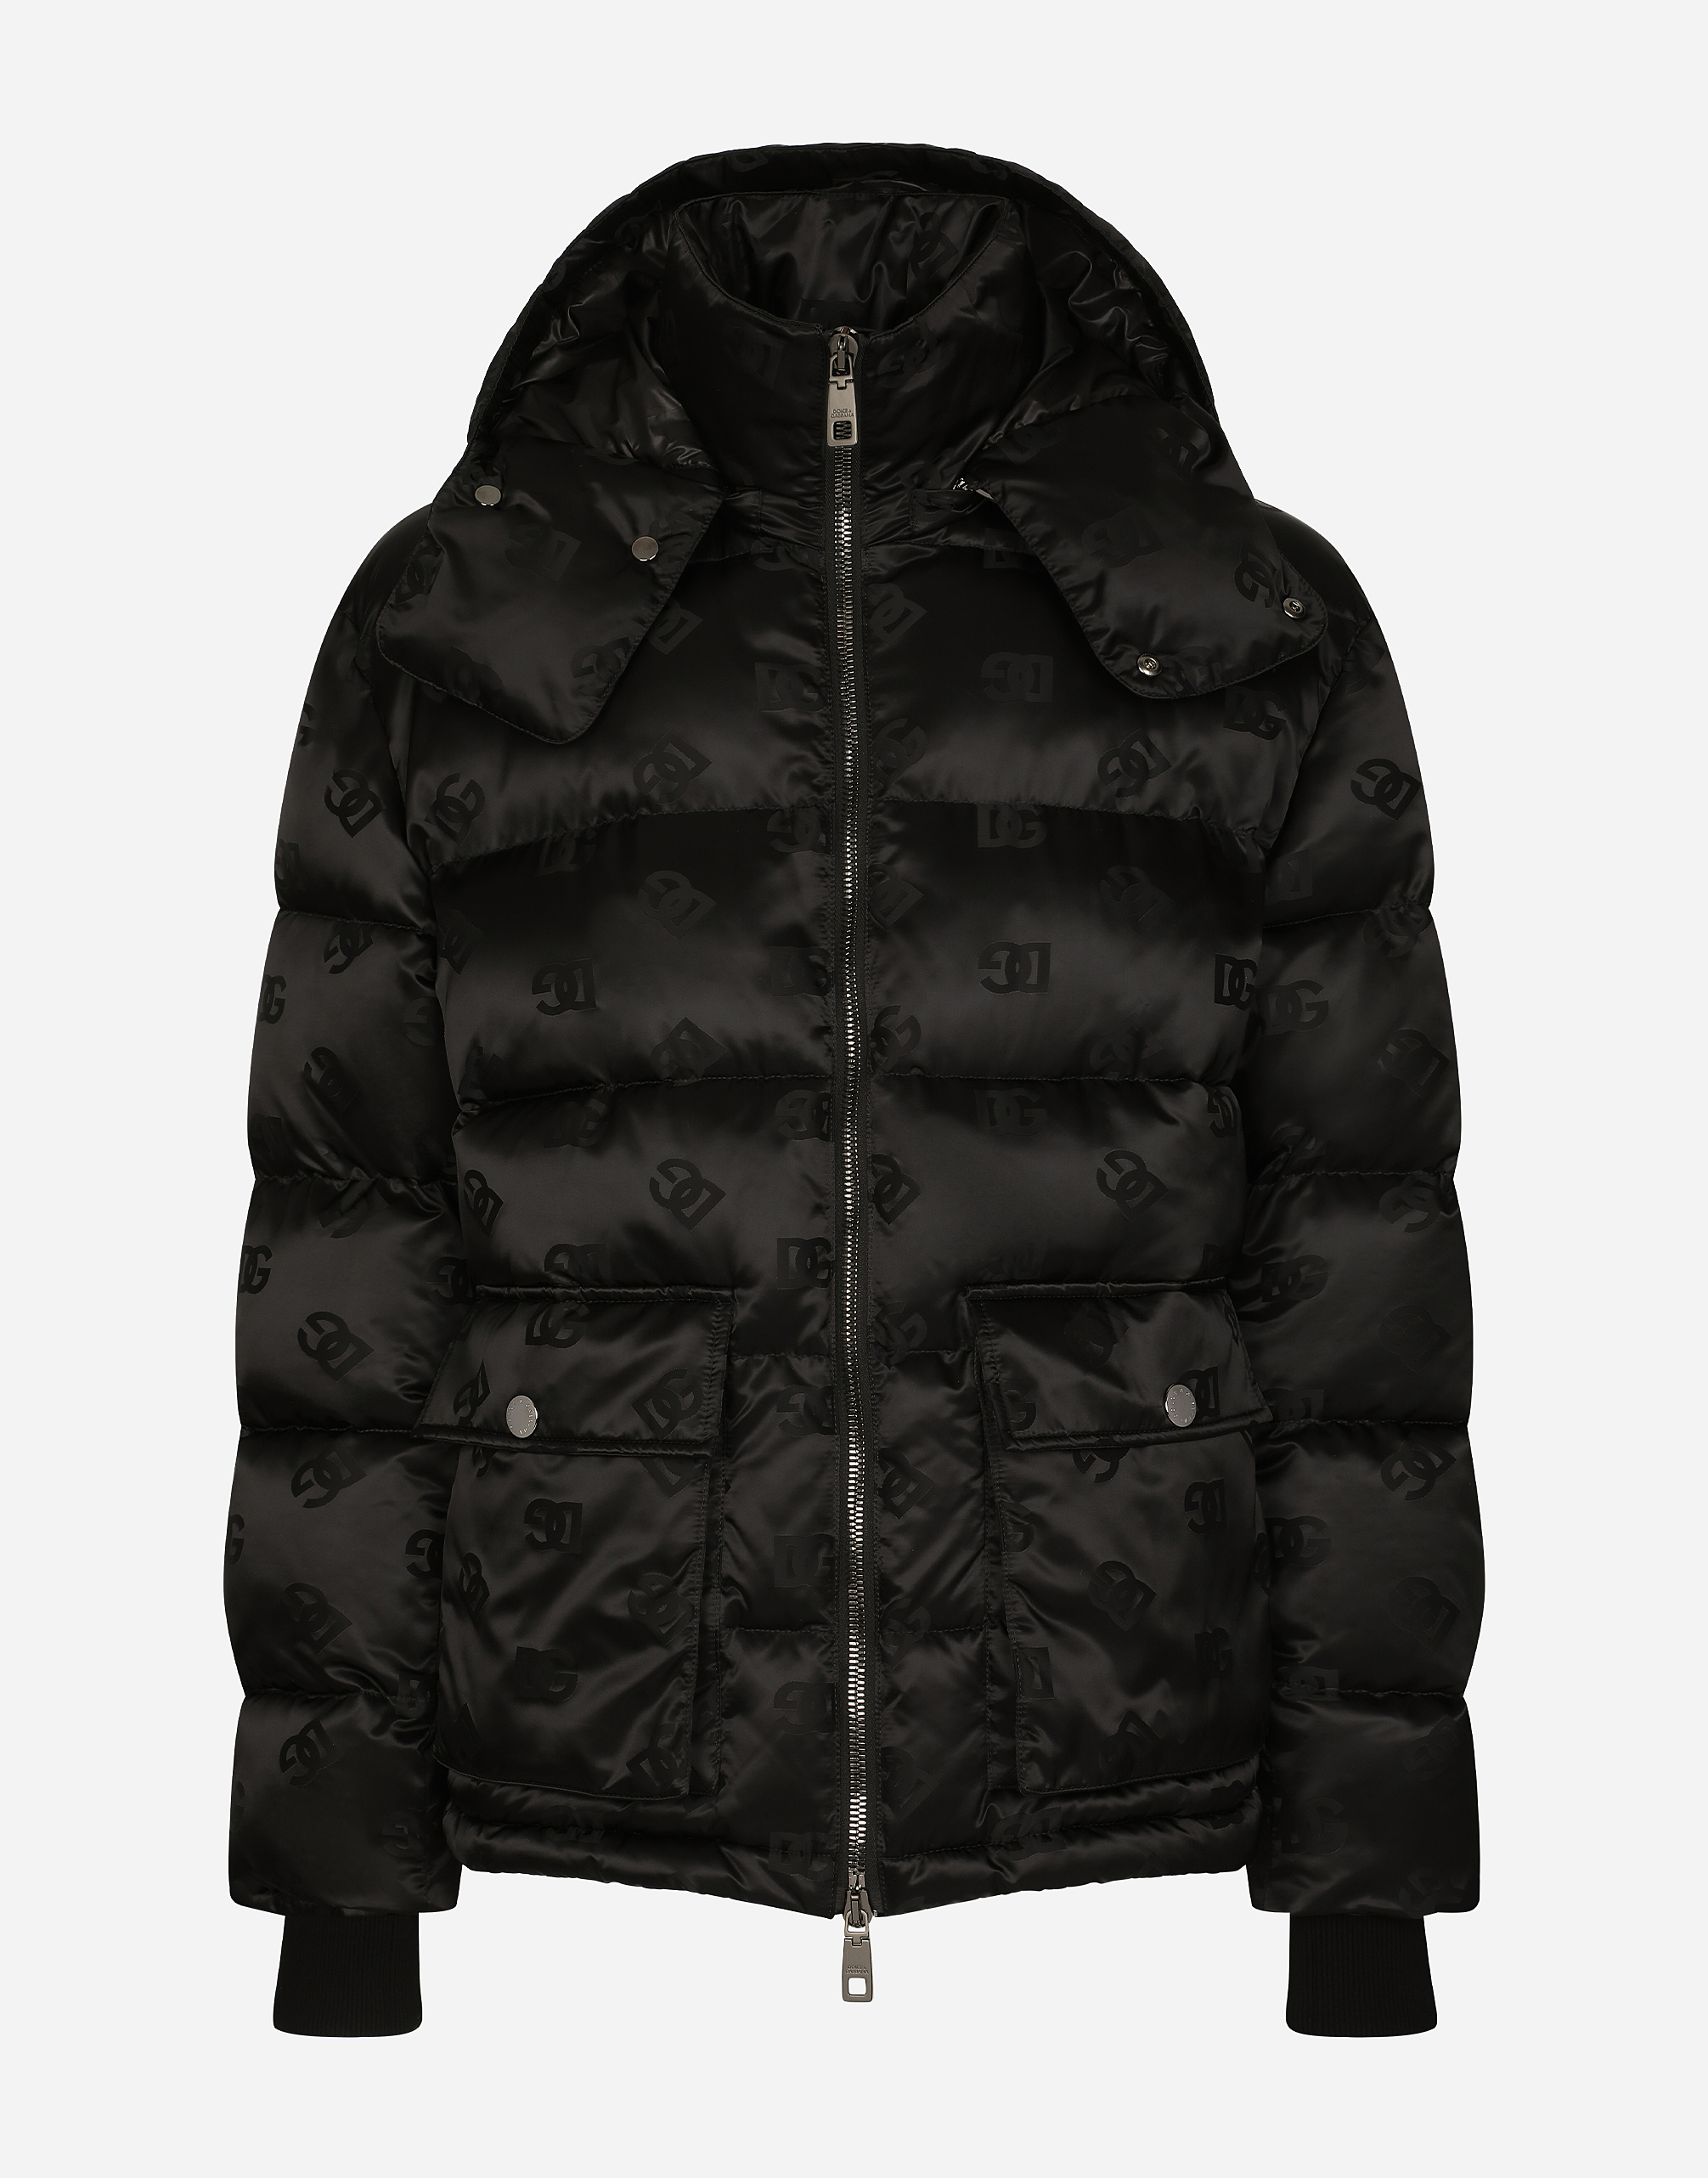 Dolce & Gabbana Dg Satin Jacquard Jacket With Hood In Black